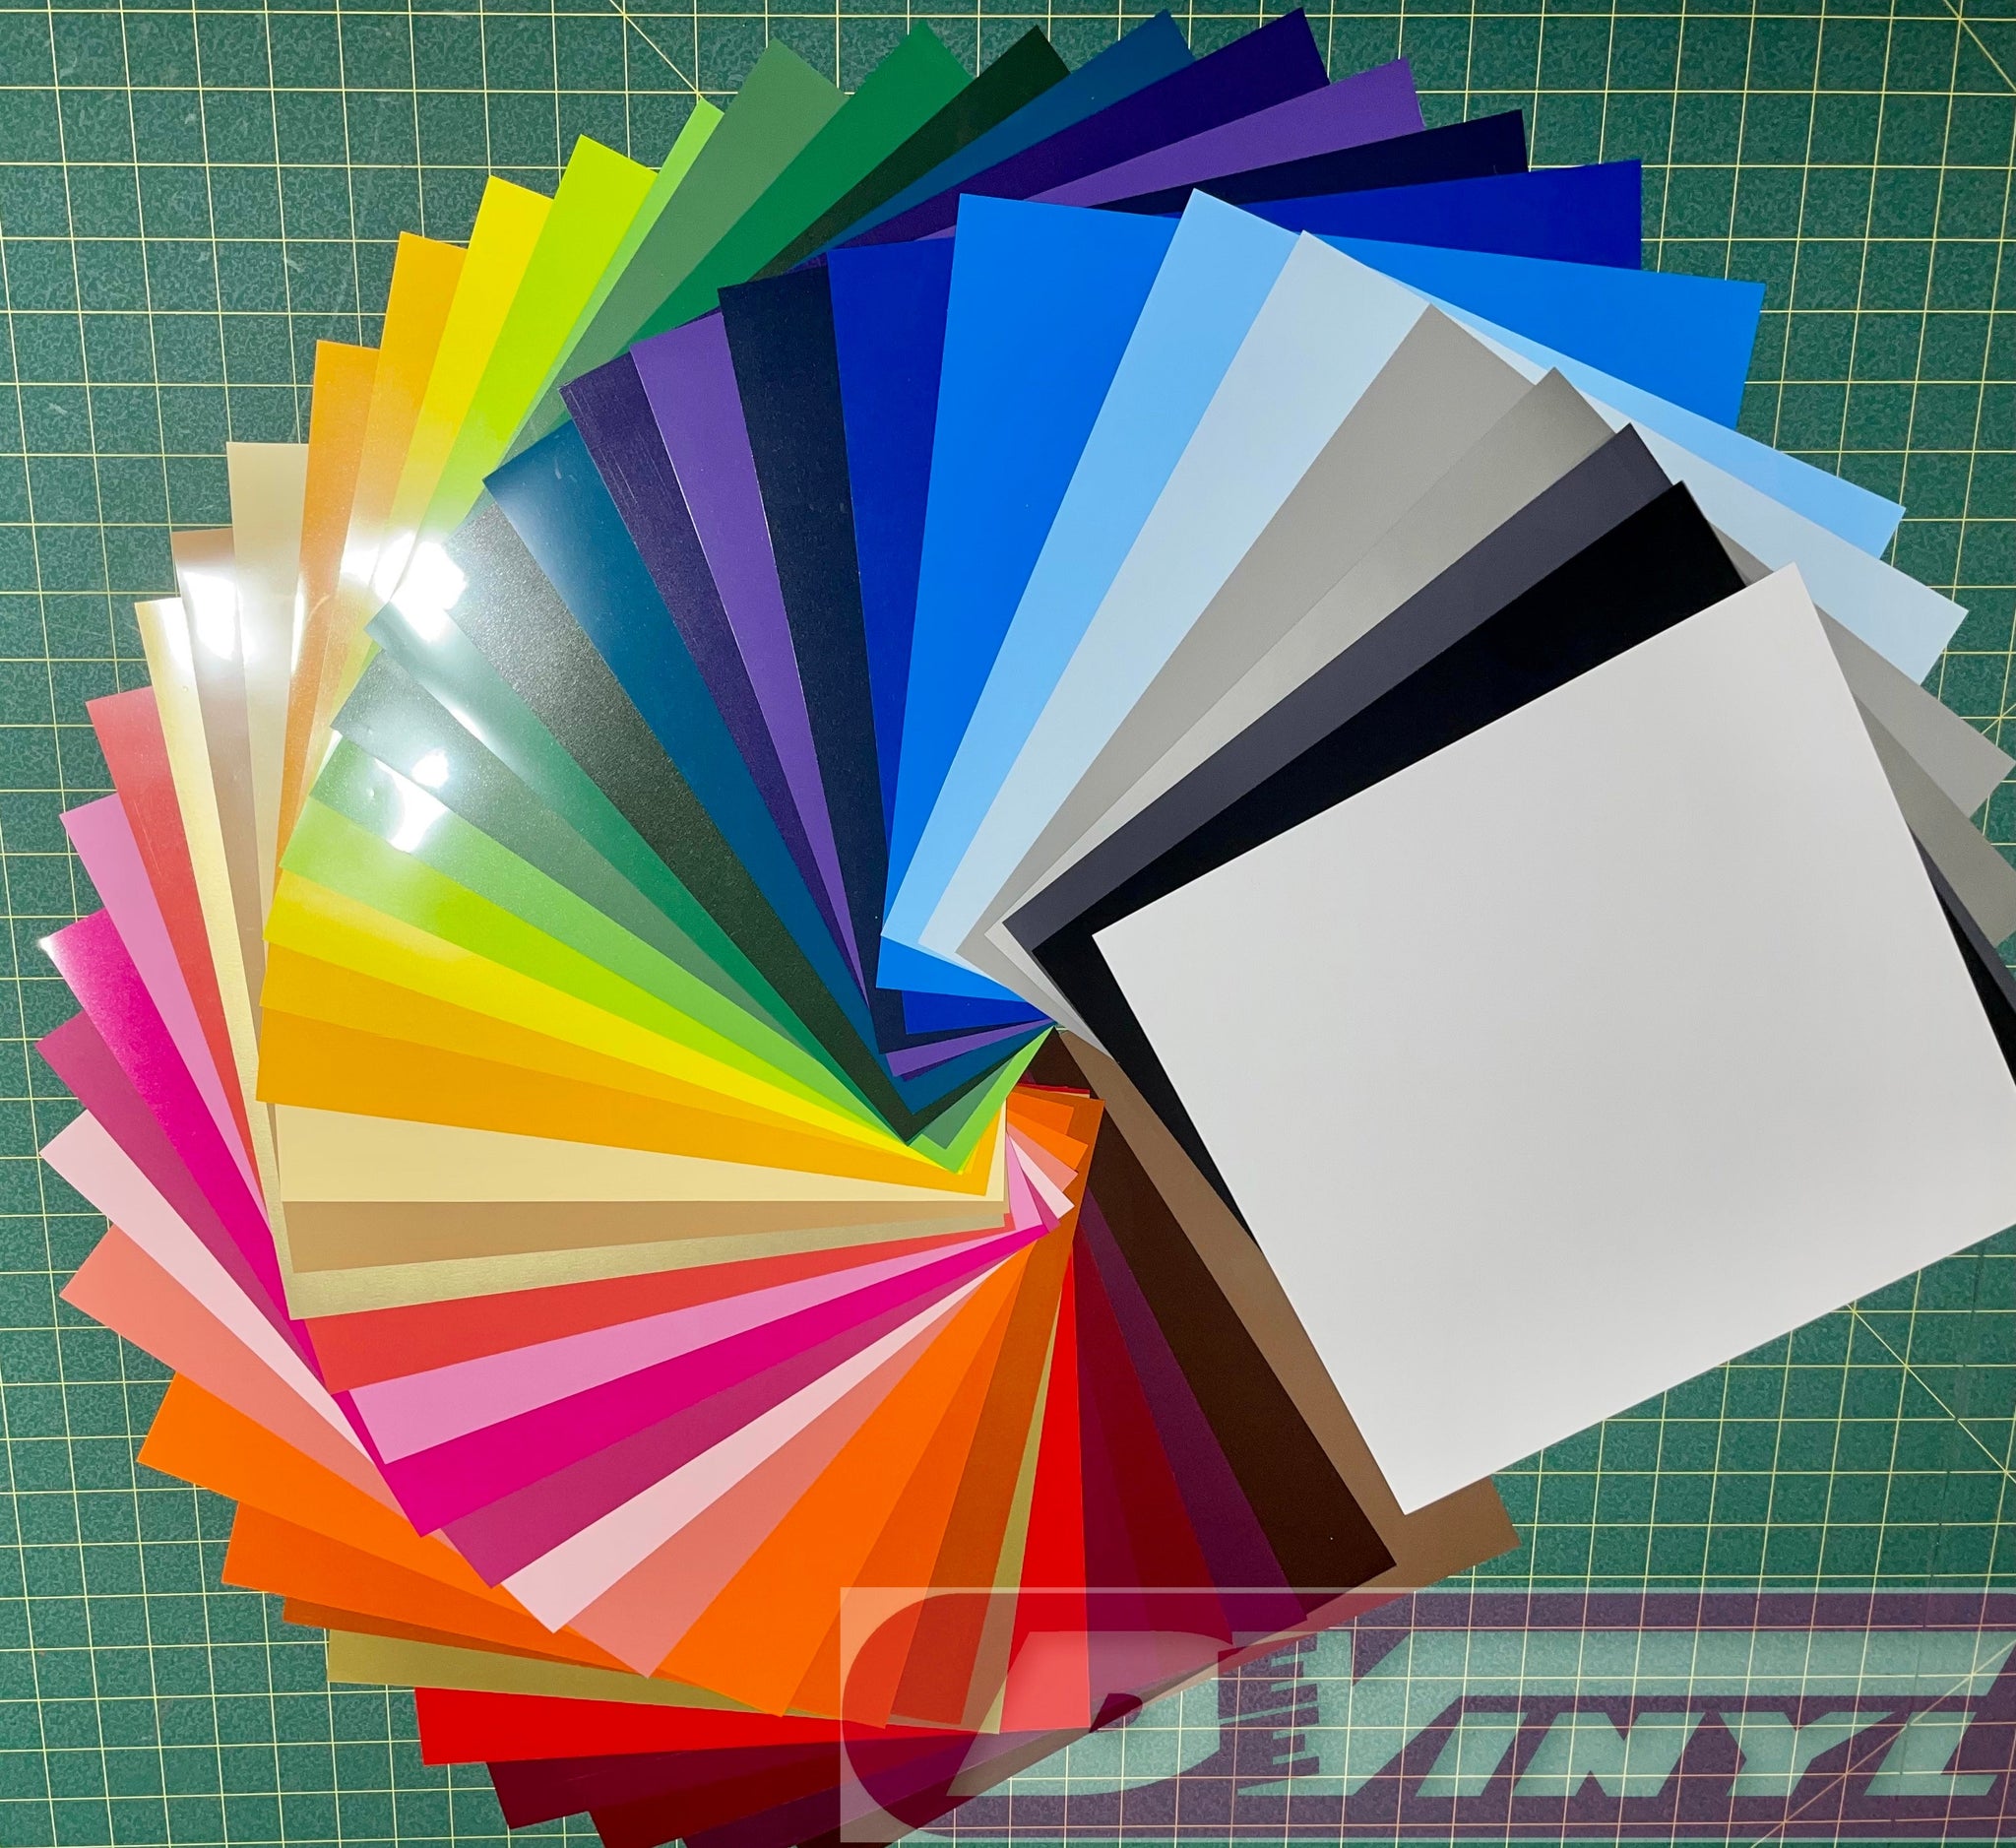 Siser EasyPSV Permanent Vinyl Bundle 12 x 12 - 12 Assorted Colors PA